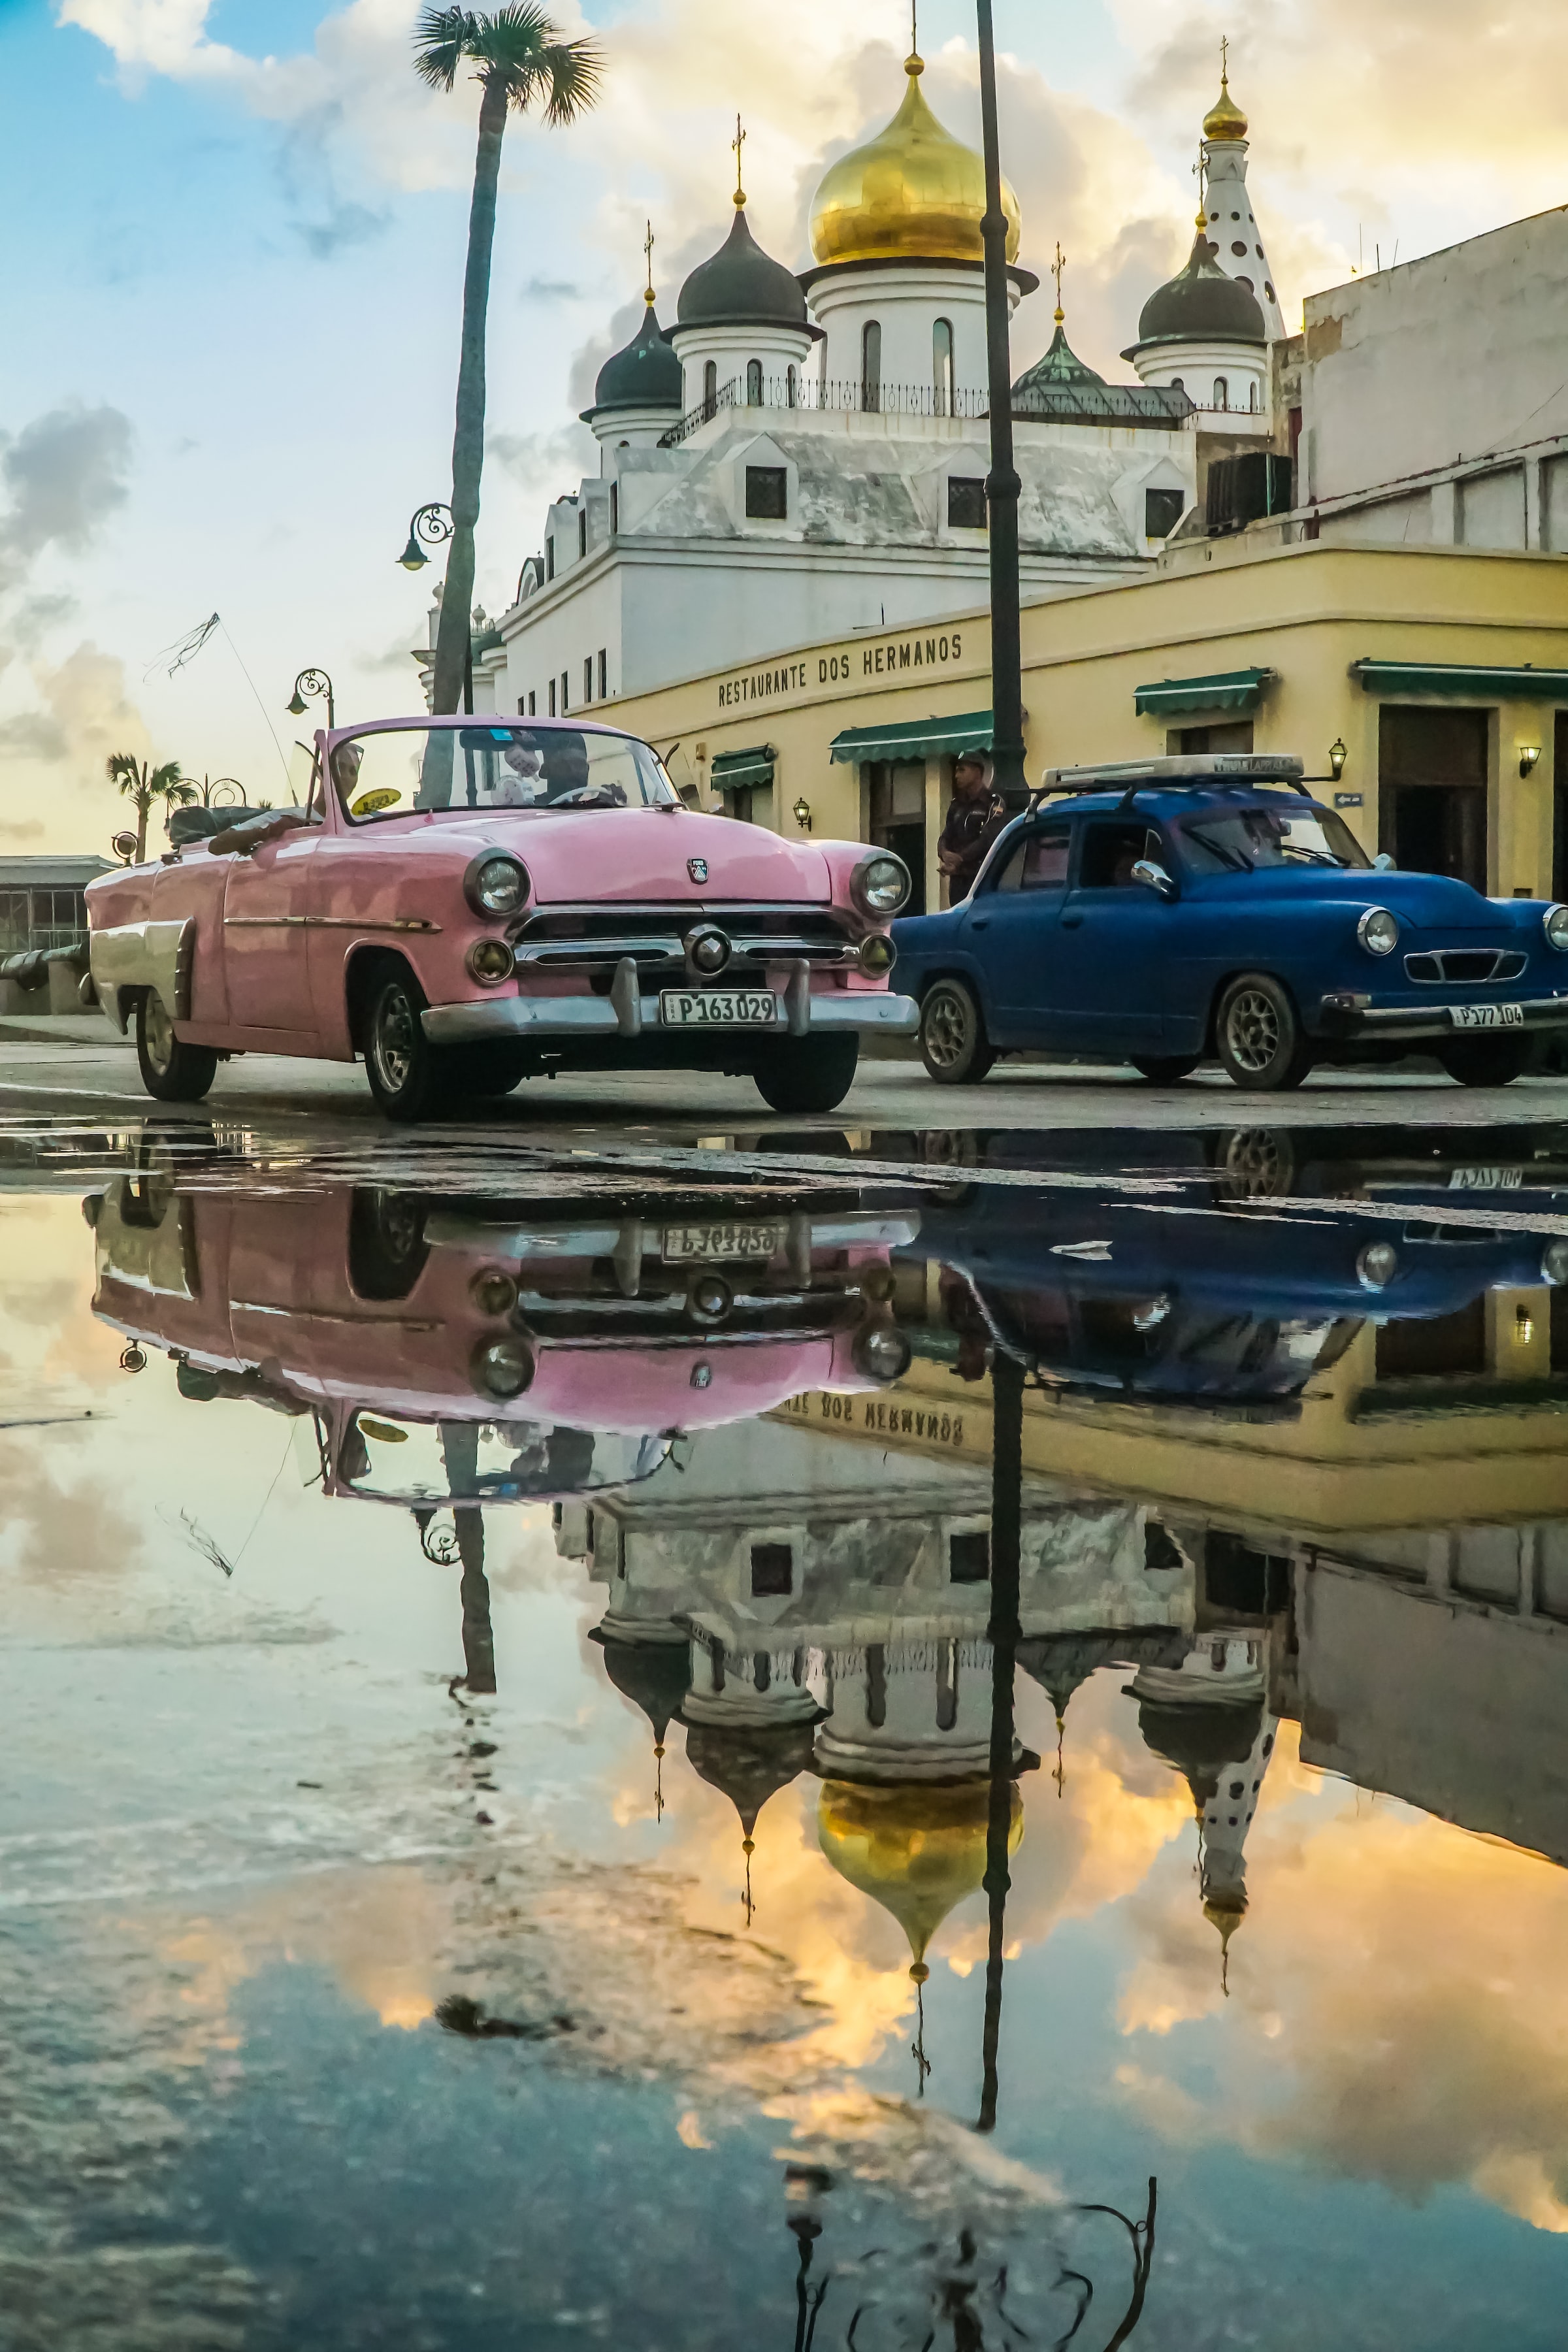 Cuba car and landmark reflect